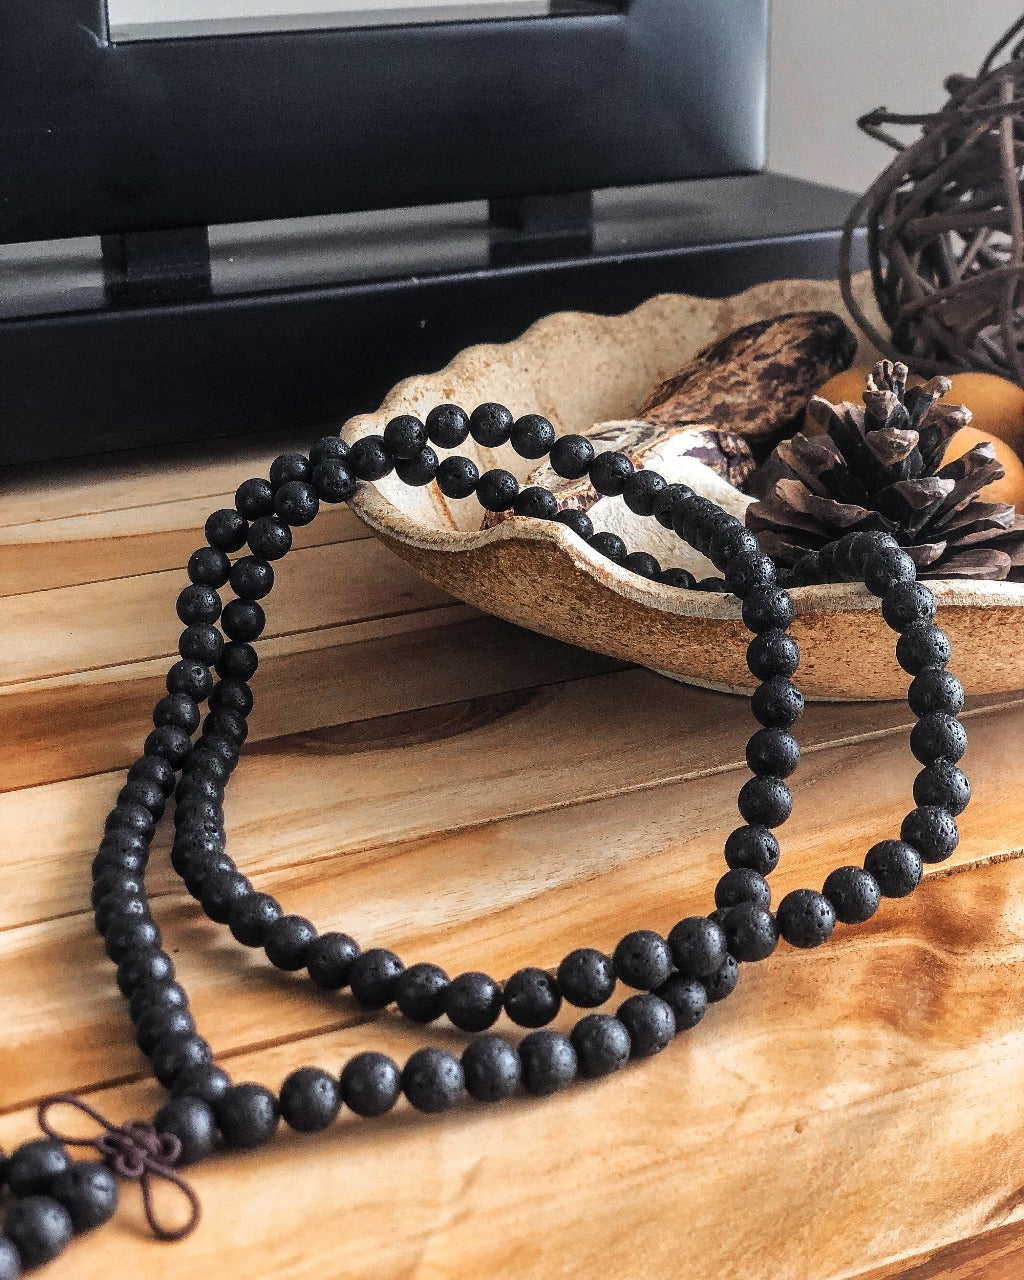 Meditation Lava Beads – Capri Vibez